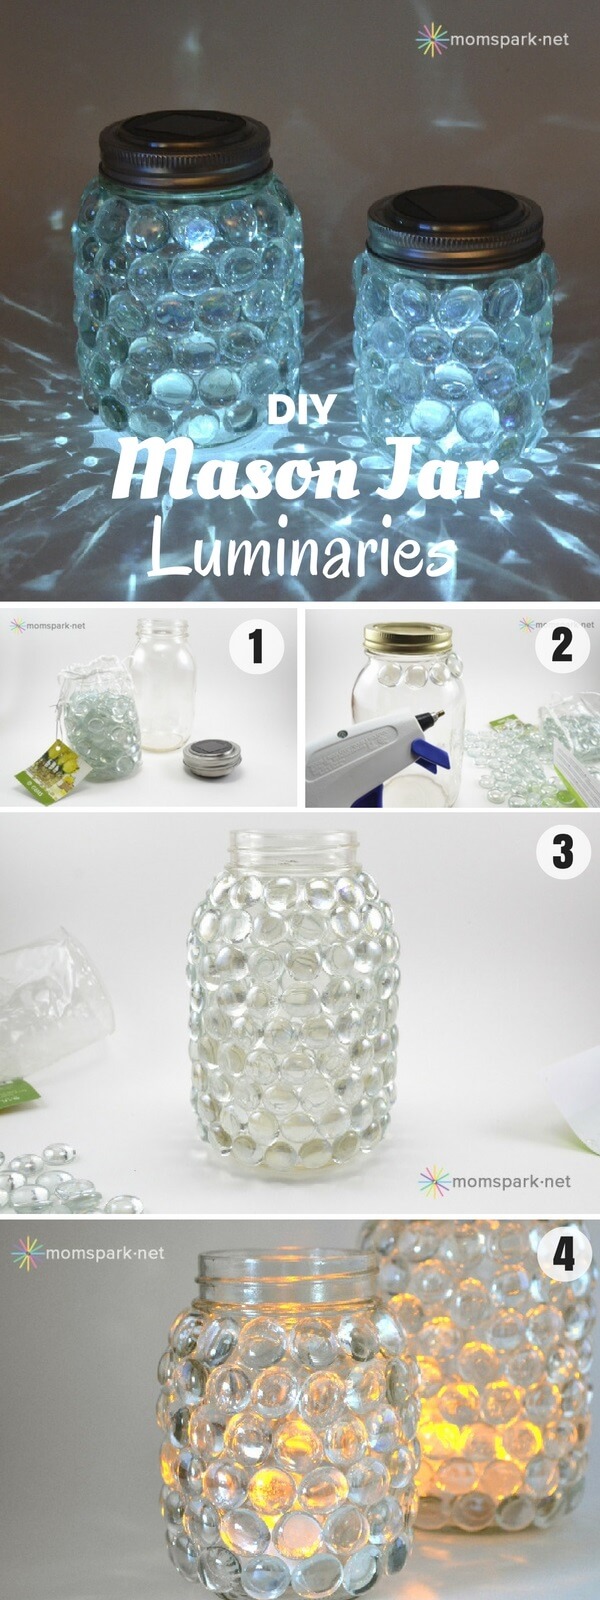 DIY Mason Jar Luminaries | Creative DIY Garden Lantern Ideas - FarmFoodFamily.com